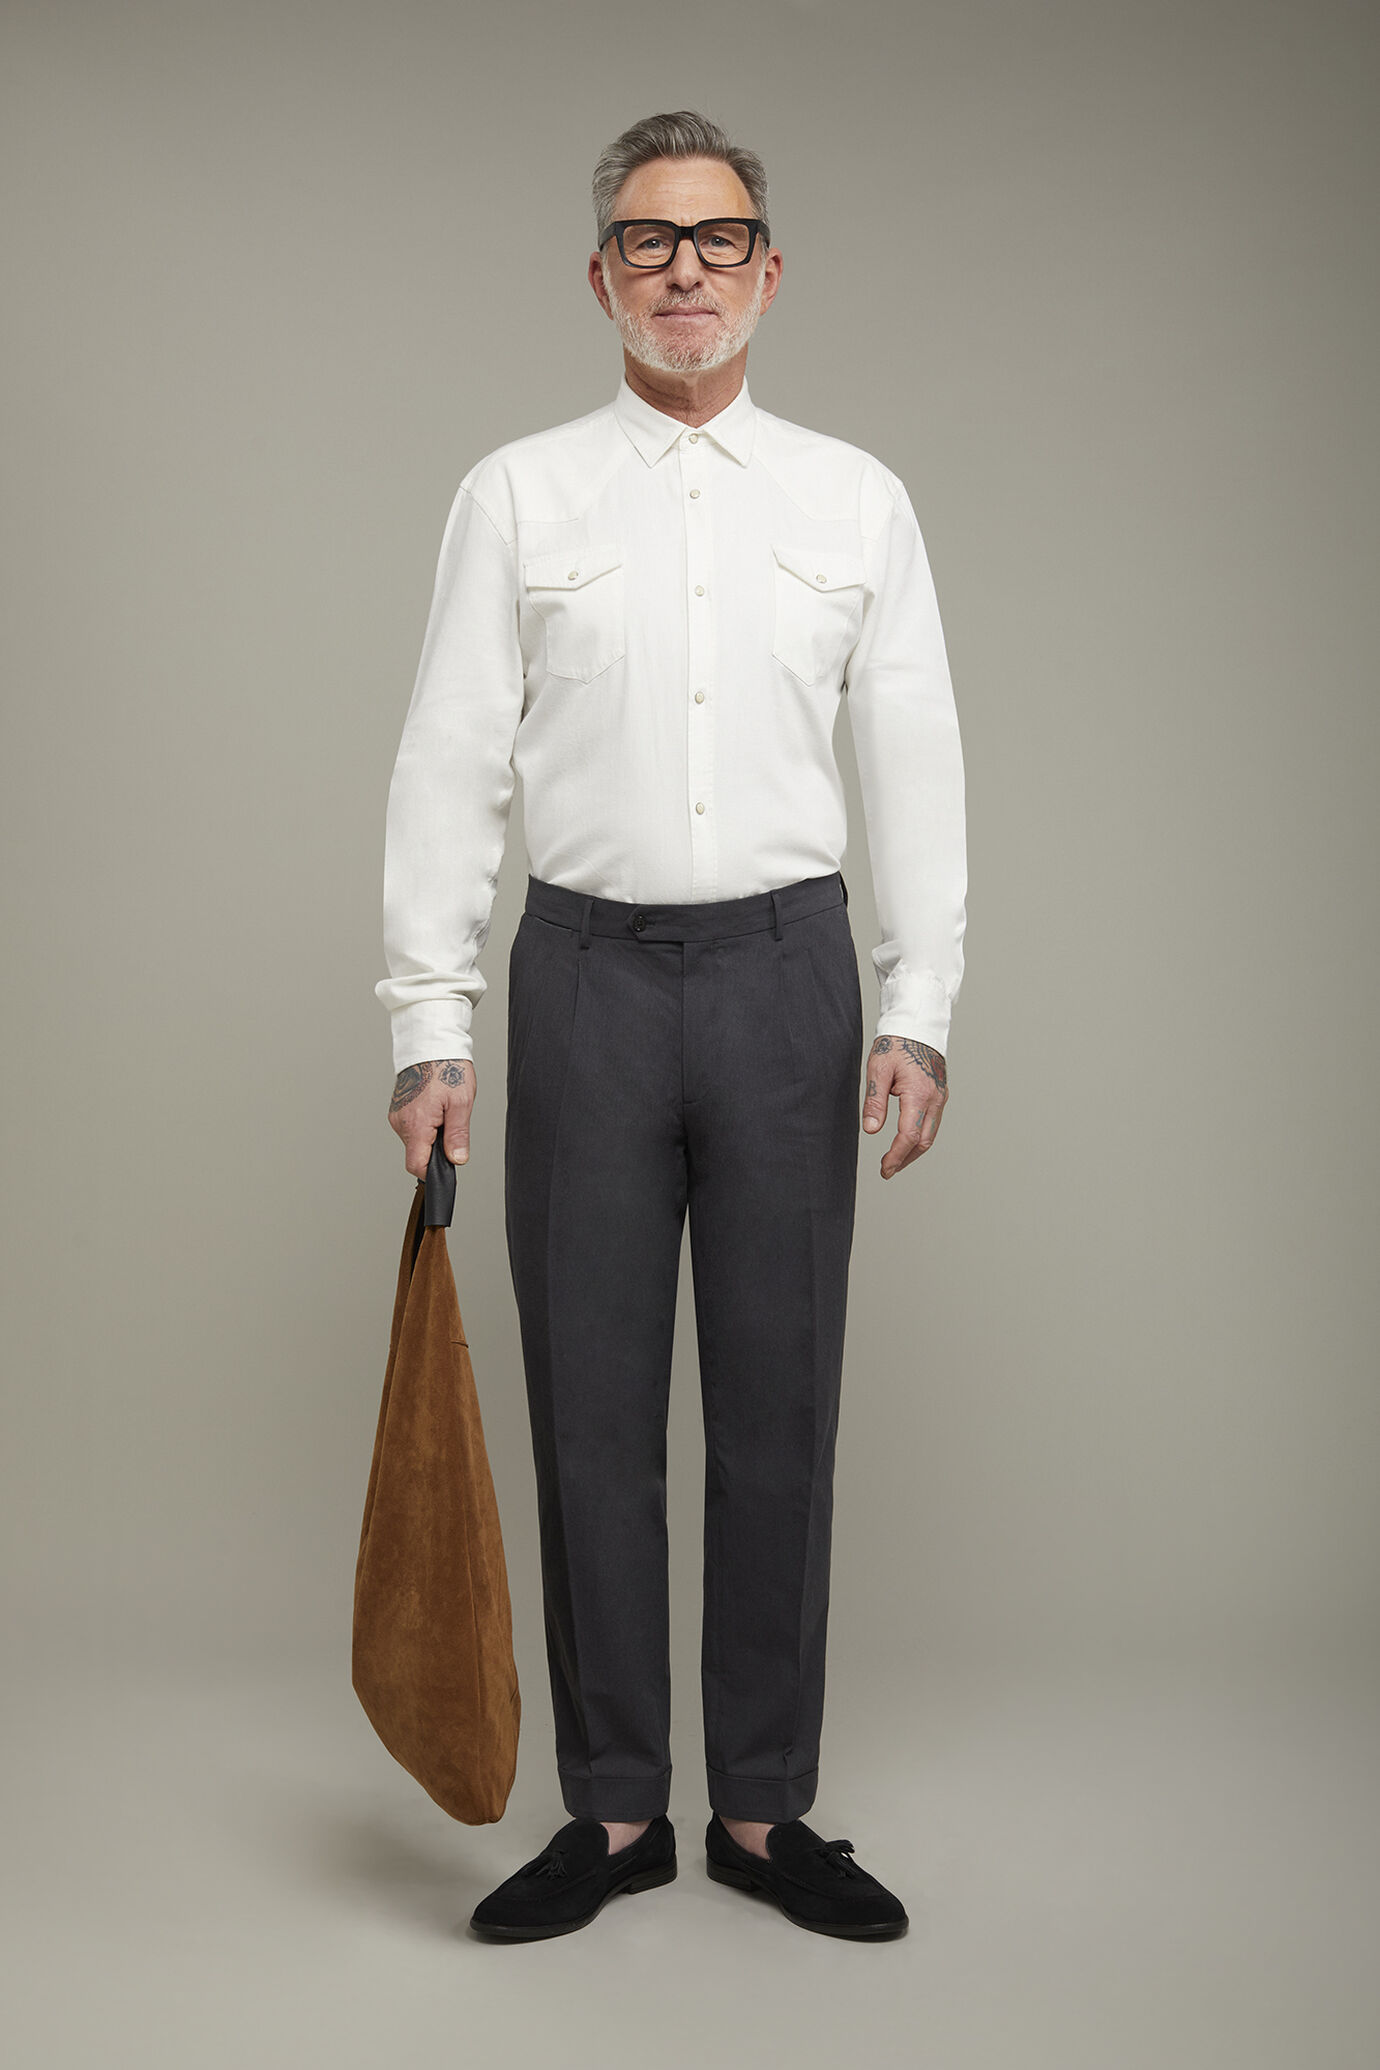 Camicia casual uomo collo classico 100% cotone tessuto denim comfort fit image number 0